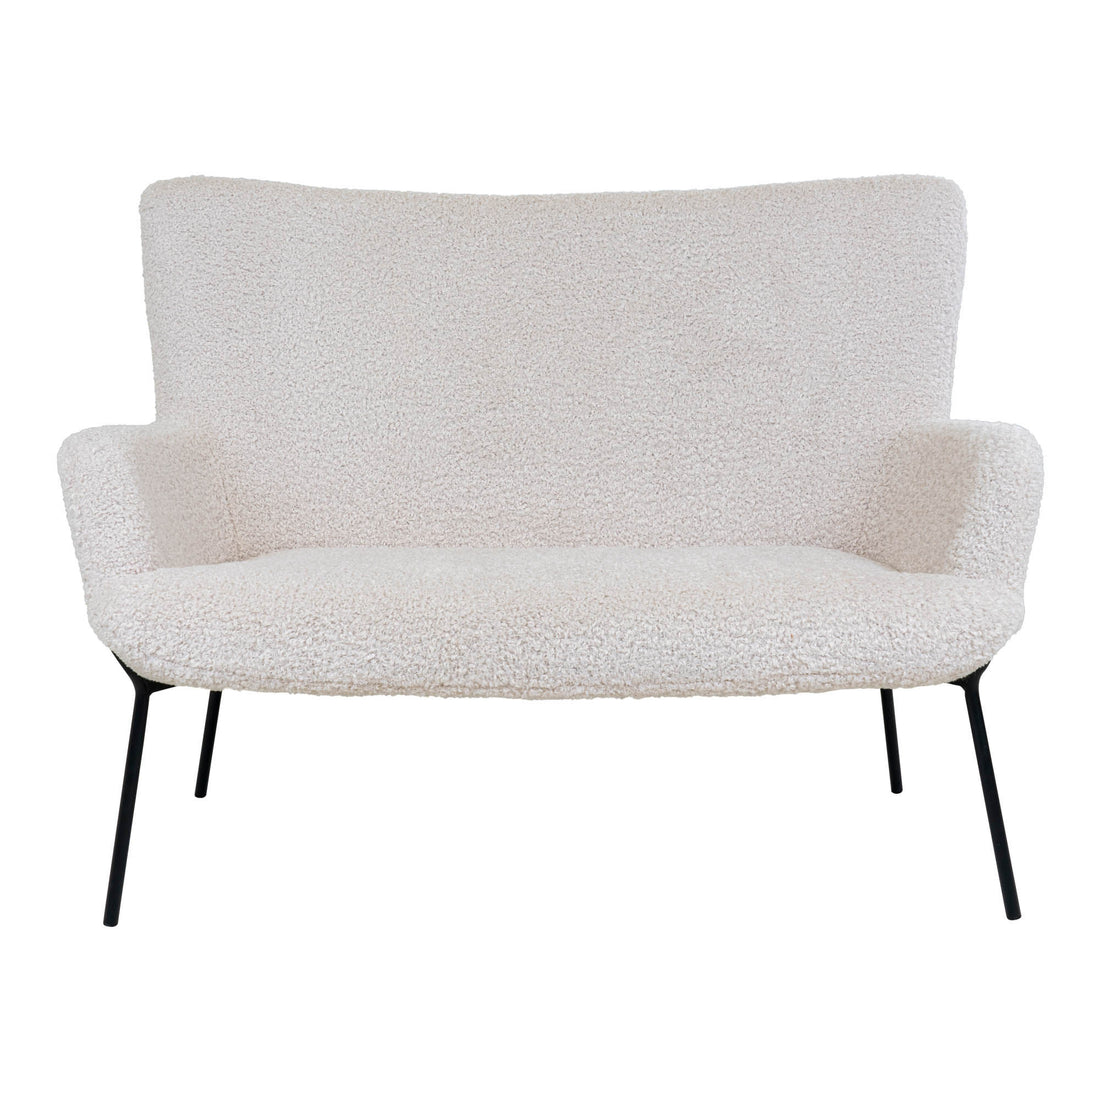 Glasgow sofa - 2 person sofa in artificial lambskin, white with black legs - 1 - pcs